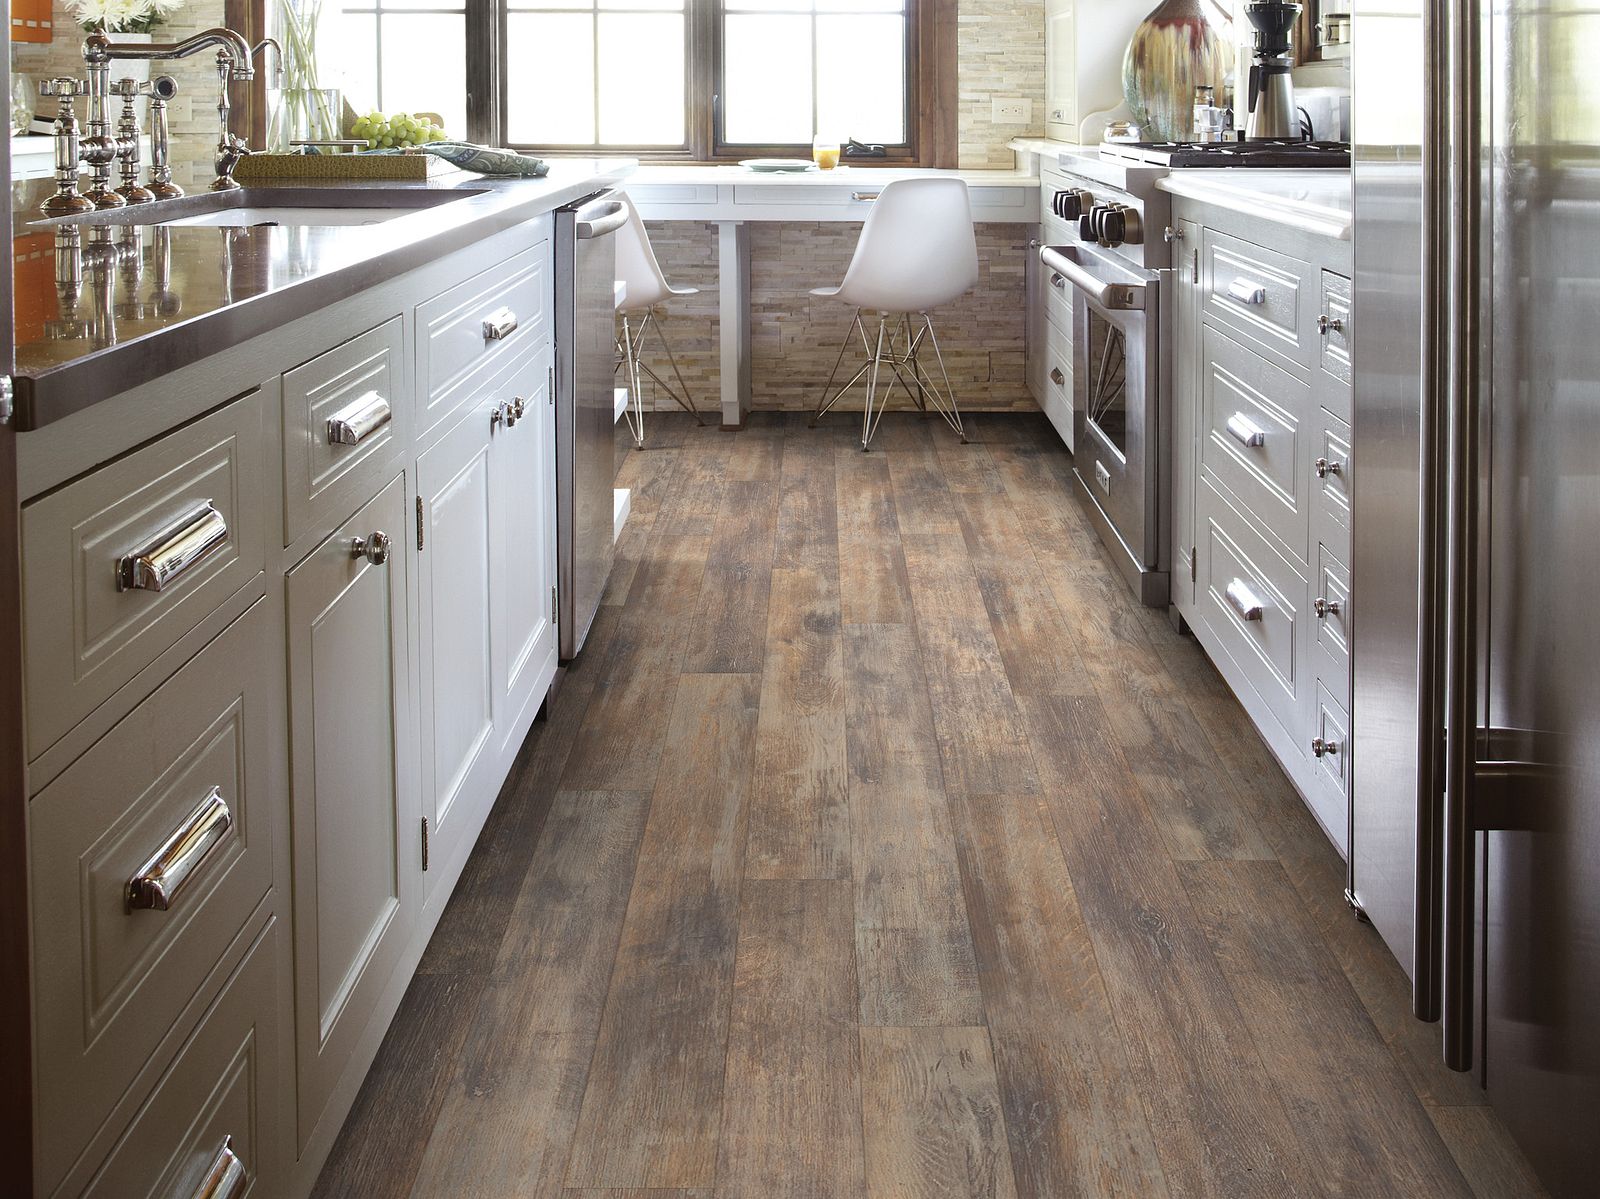 Install Laminate Flooring Shaw Floors, Should Laminate Flooring Be Installed Under Kitchen Cabinets